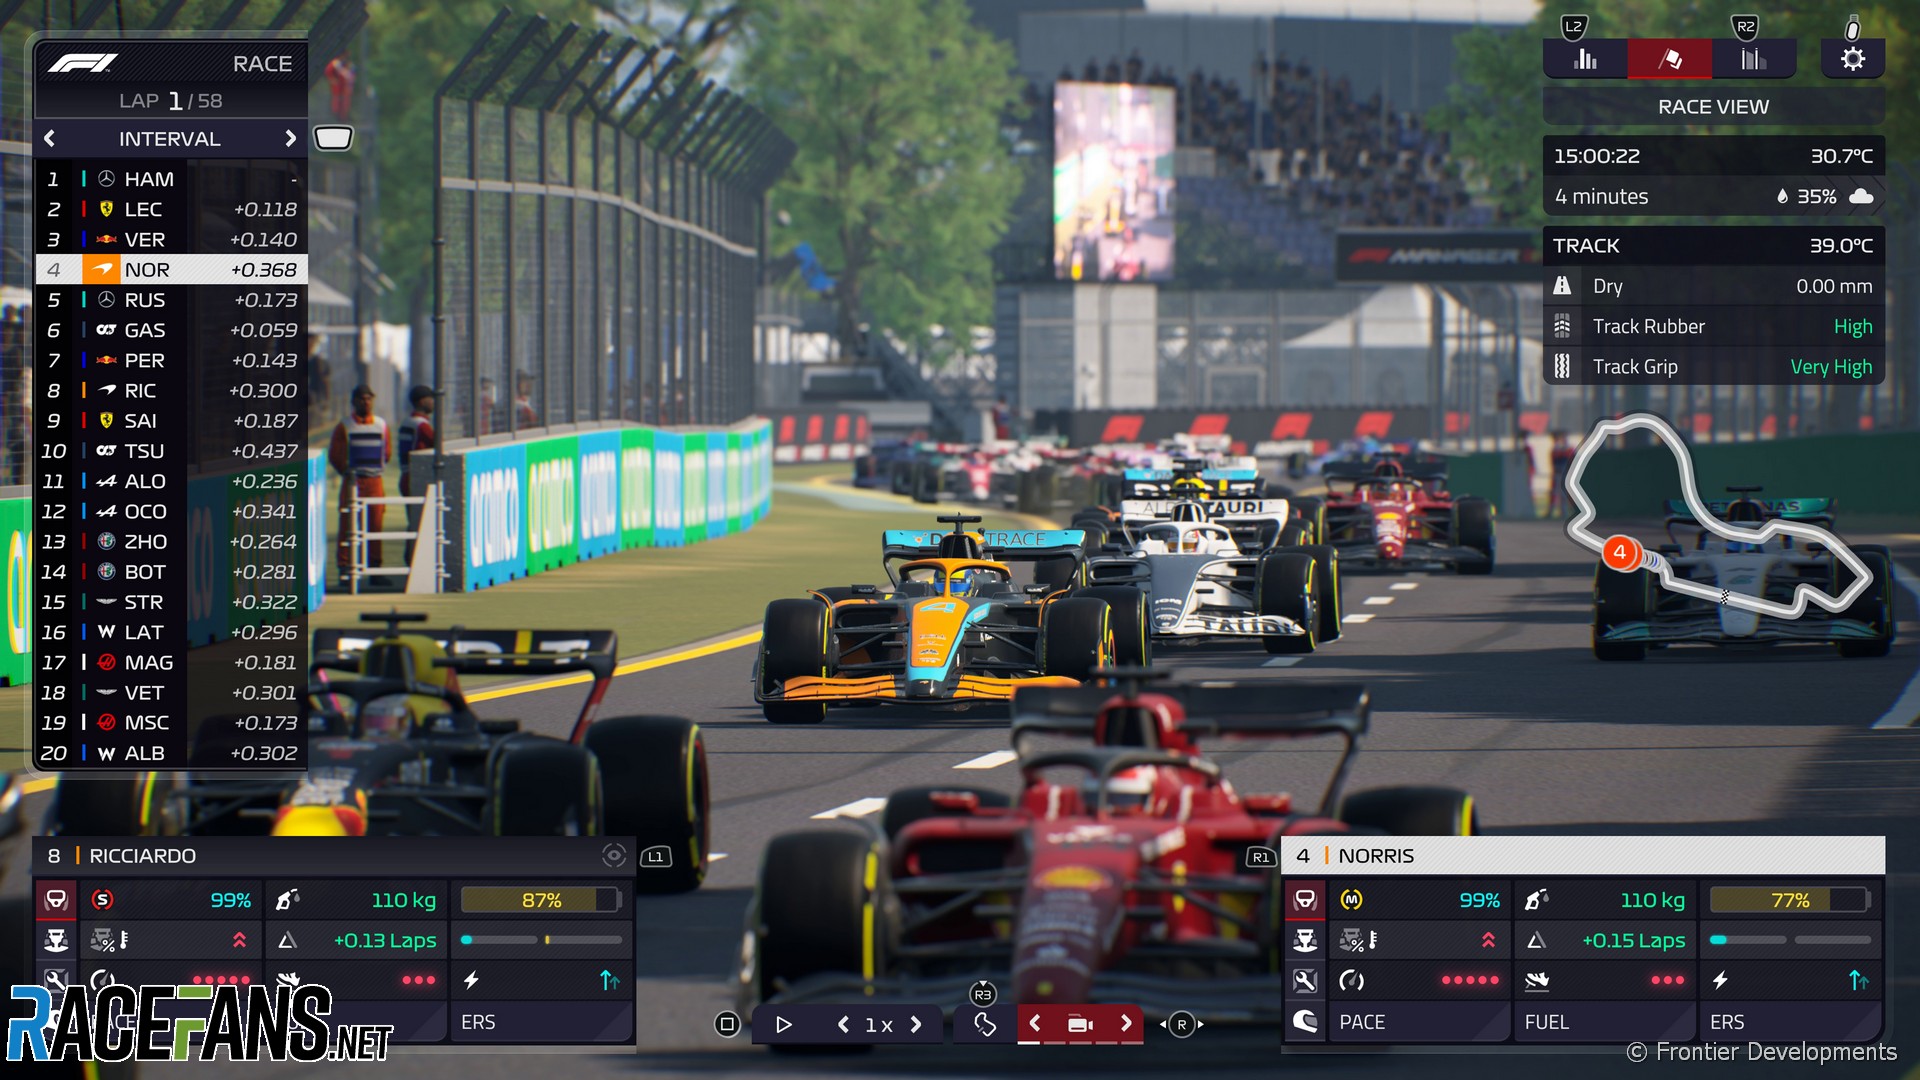 F1 Manager 22 race screenshot (PS5)